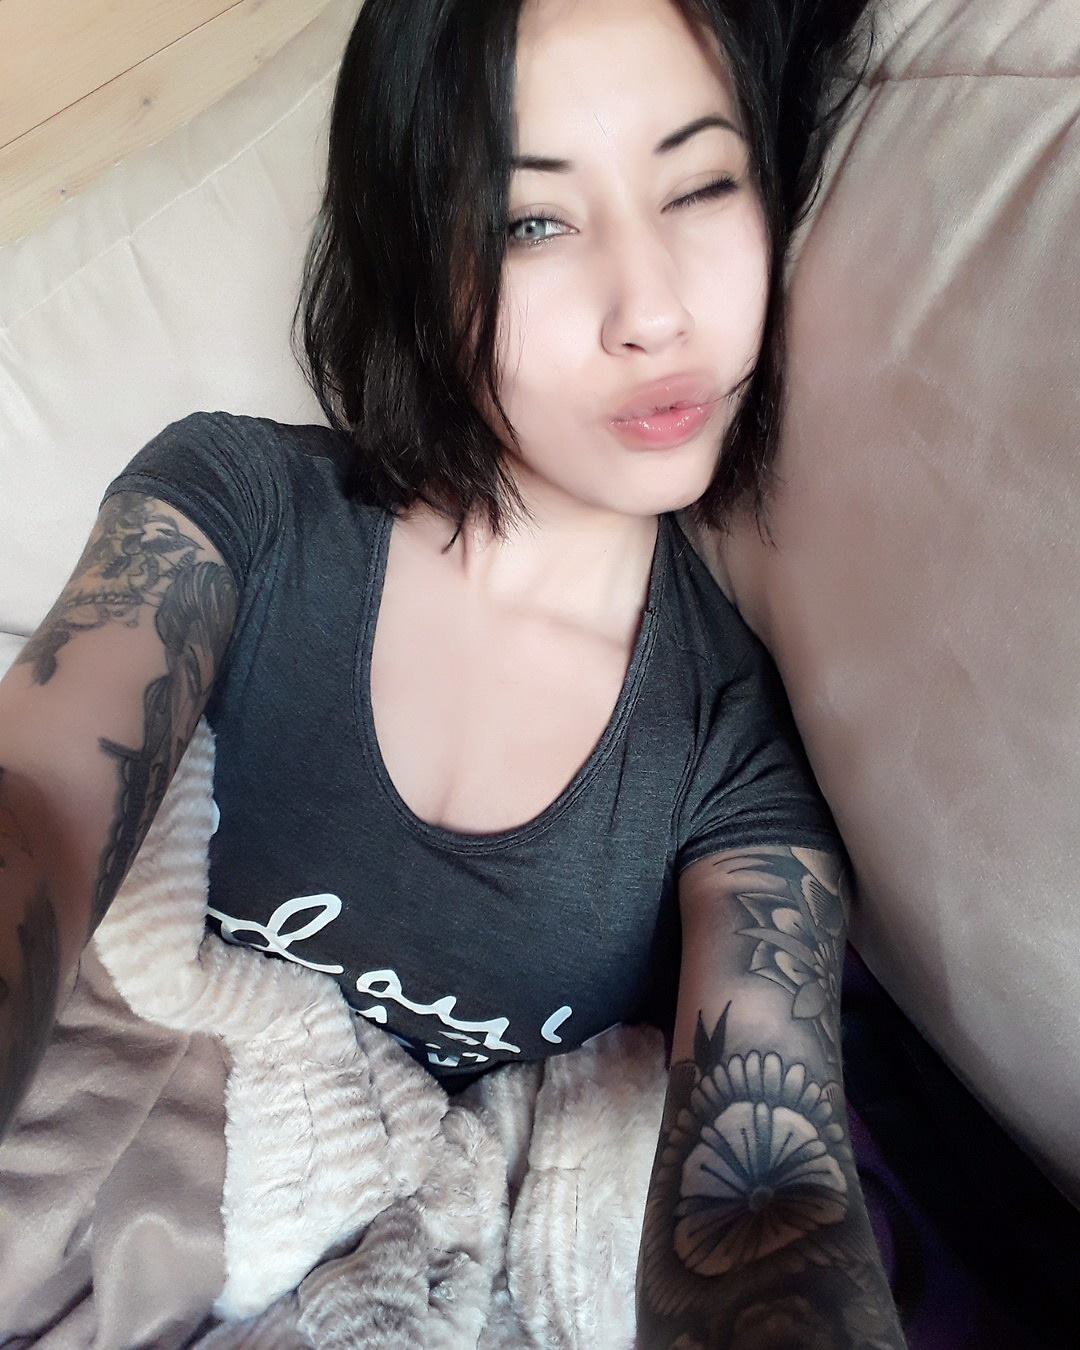 Hot Tattoeed Asian Webcam Girl Playing